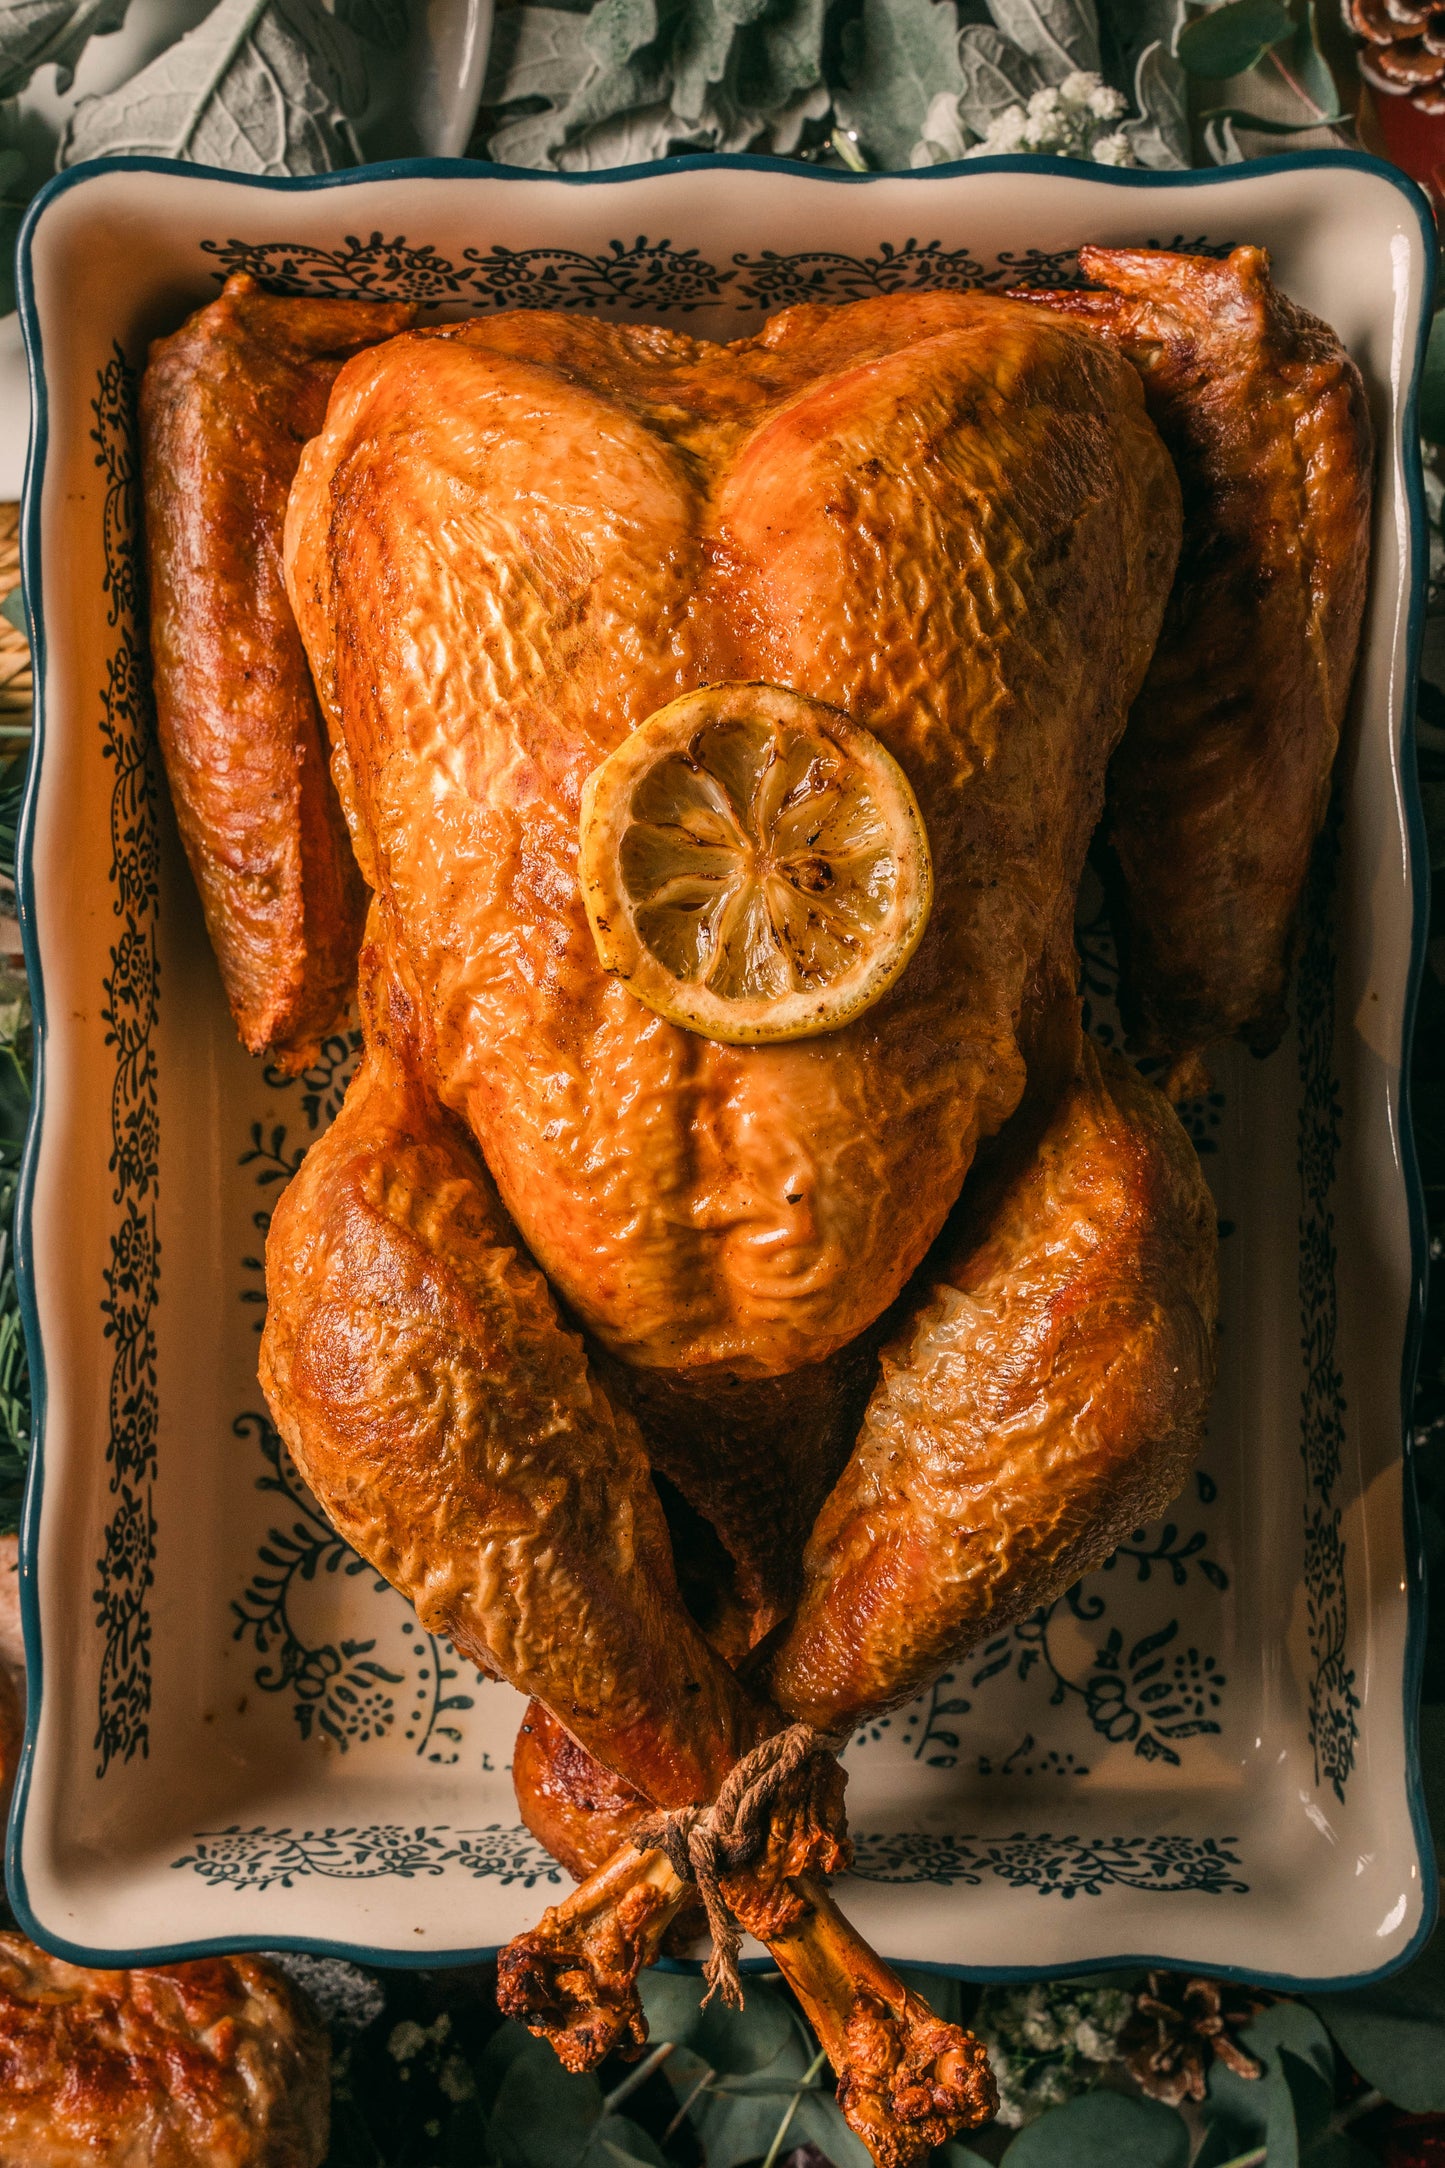 A la Carte: Oven-roast Whole Turkey